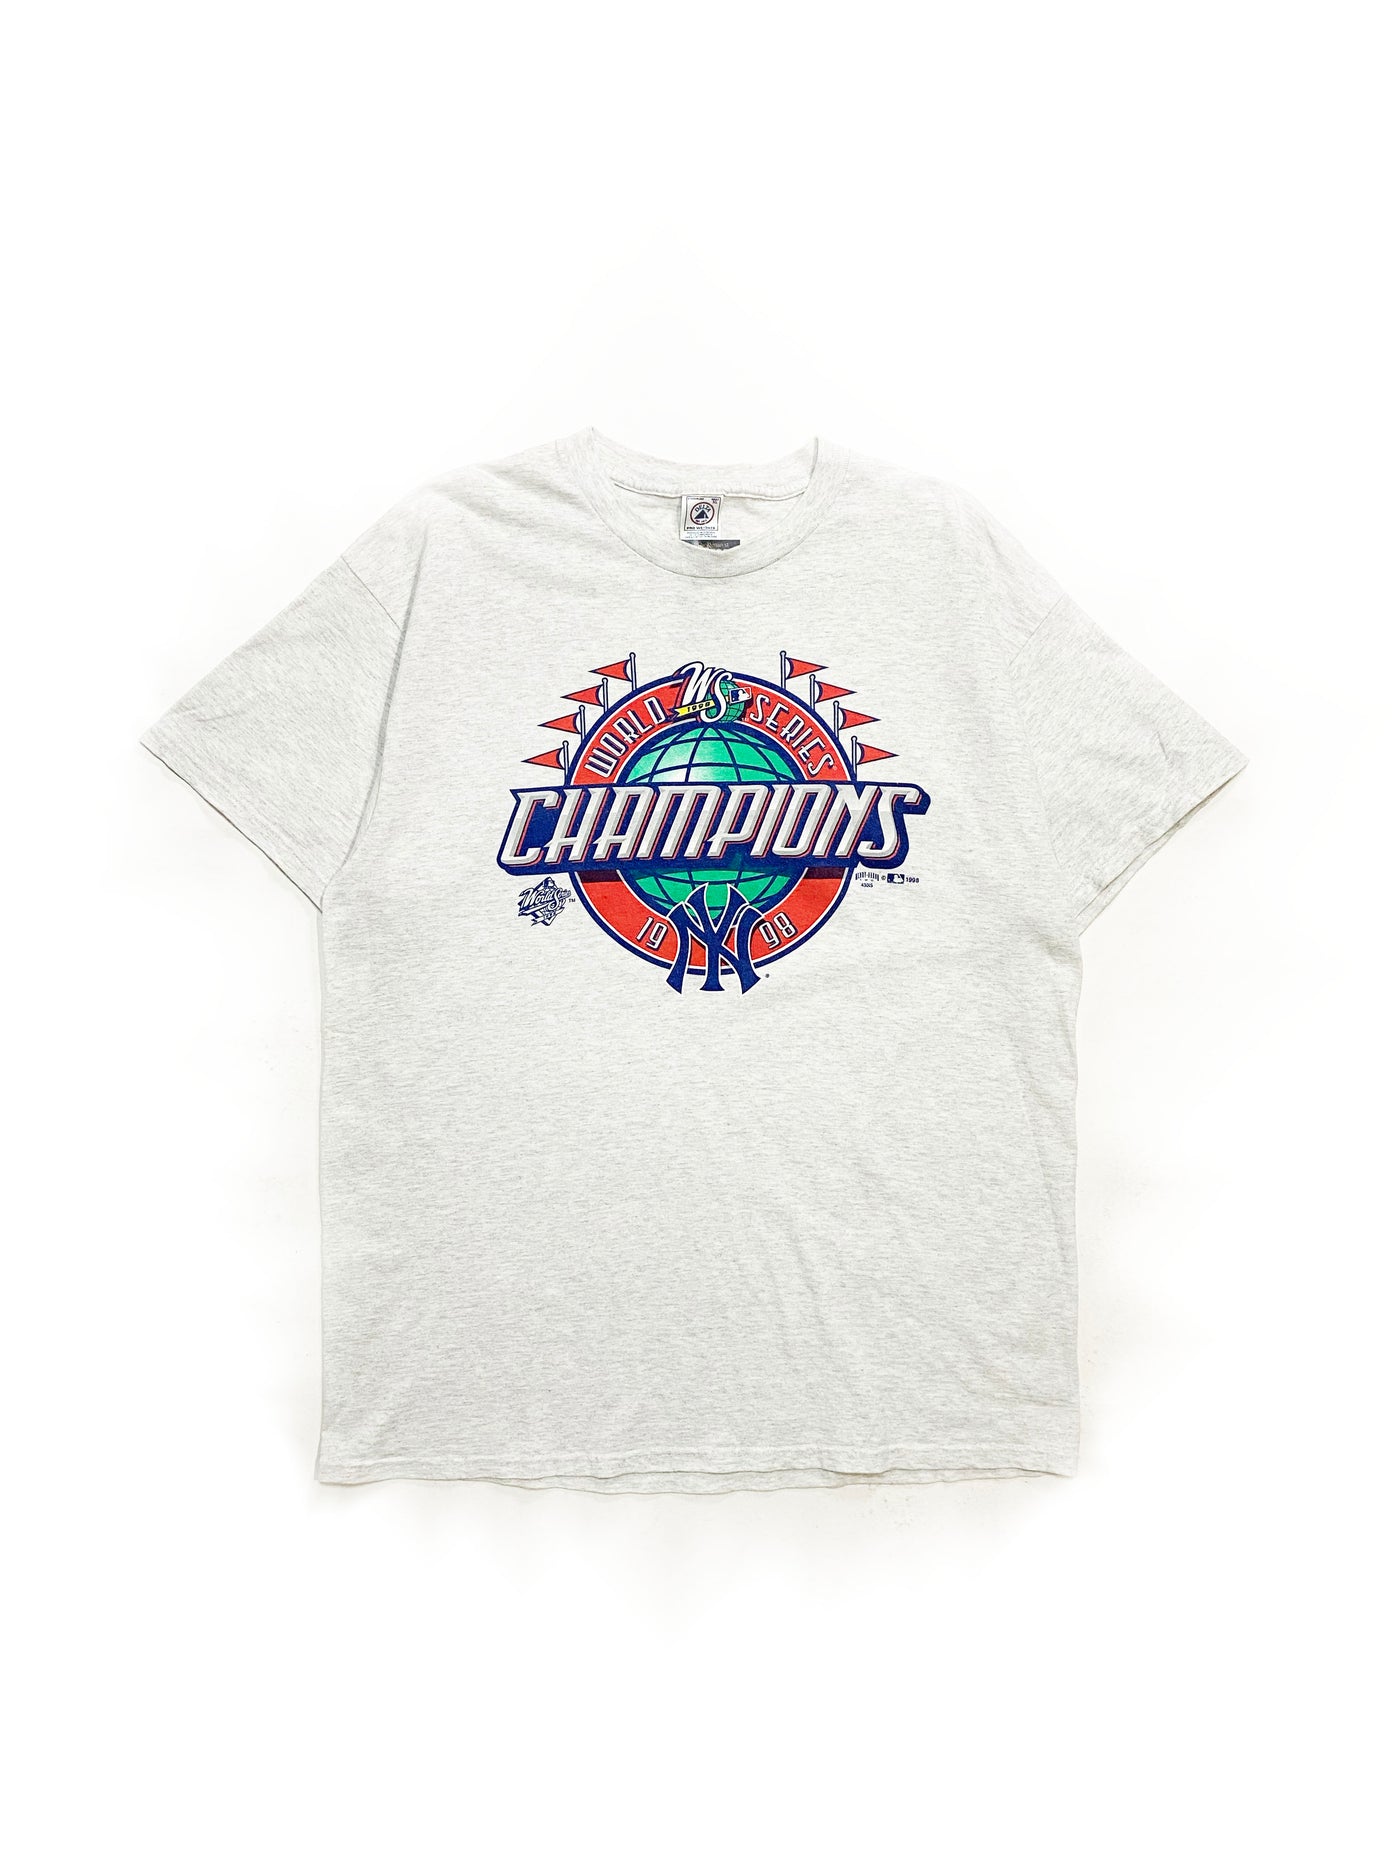 Vintage 1998 World Series Champions T-Shirt